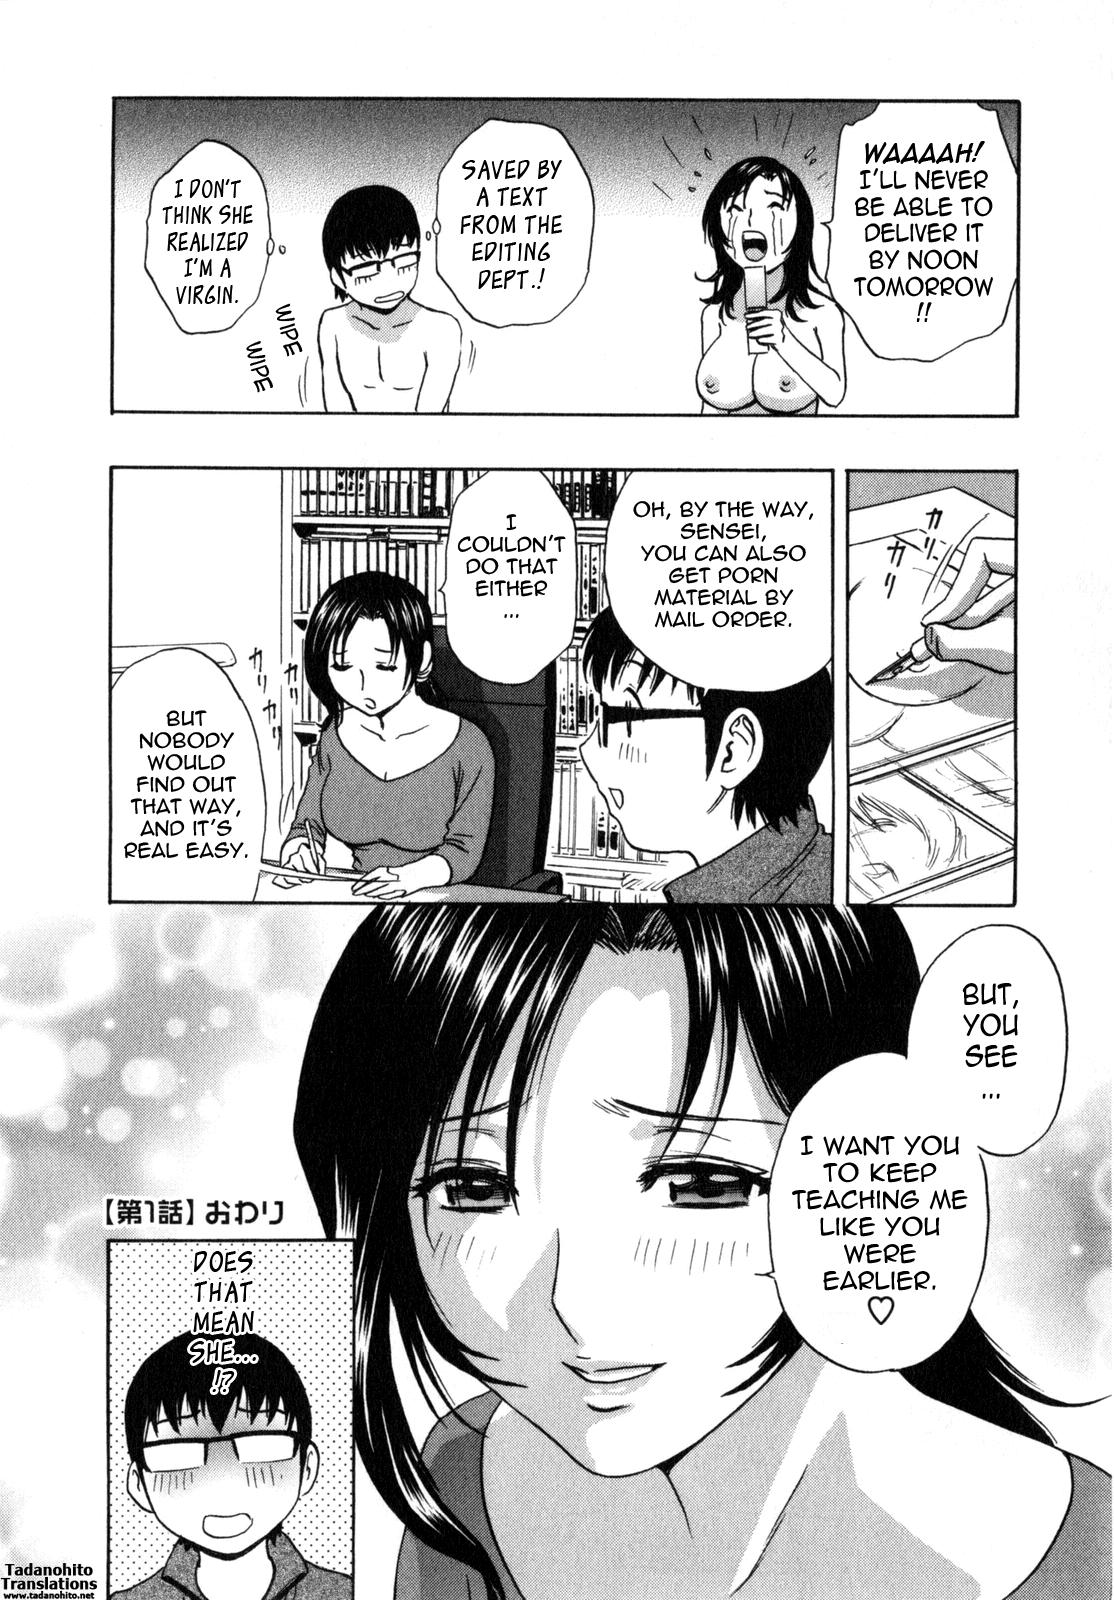 [Hidemaru] Life with Married Women Just Like a Manga 1 - Ch. 1-5 [English] {Tadanohito} 24